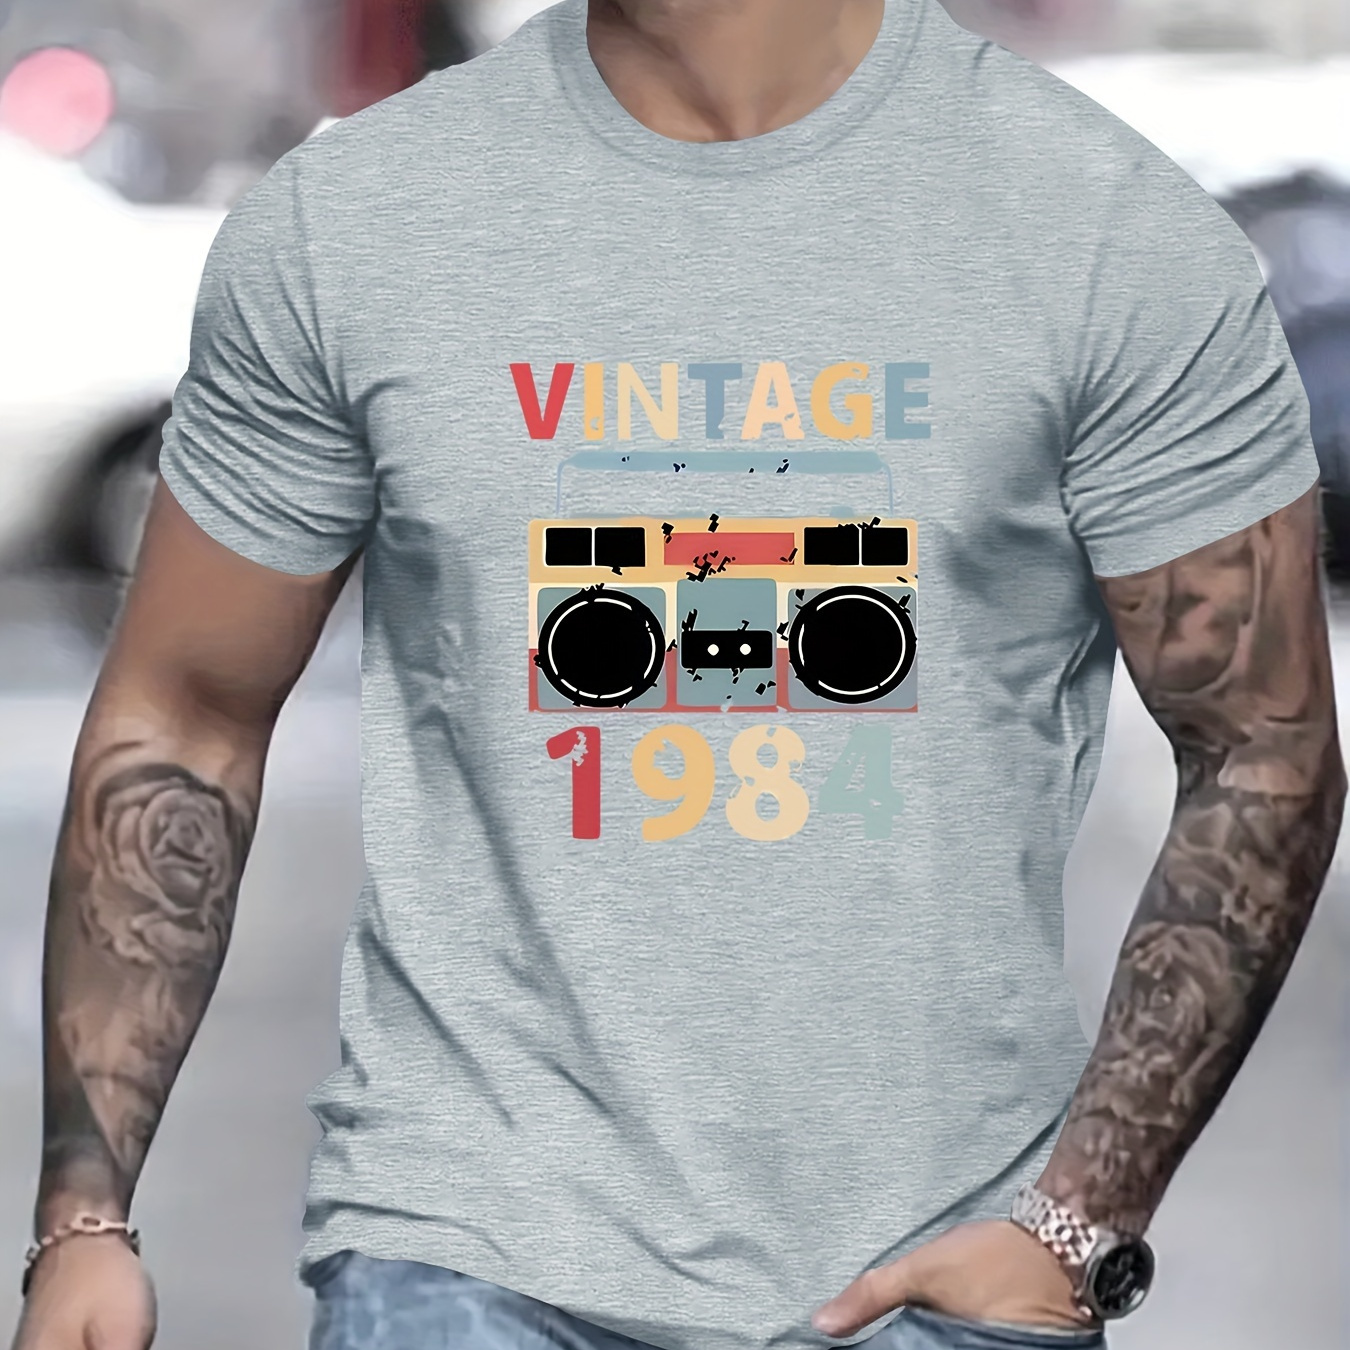 

Vintage Cassette Print T Shirt, Tees For Men, Casual Short Sleeve T-shirt For Summer